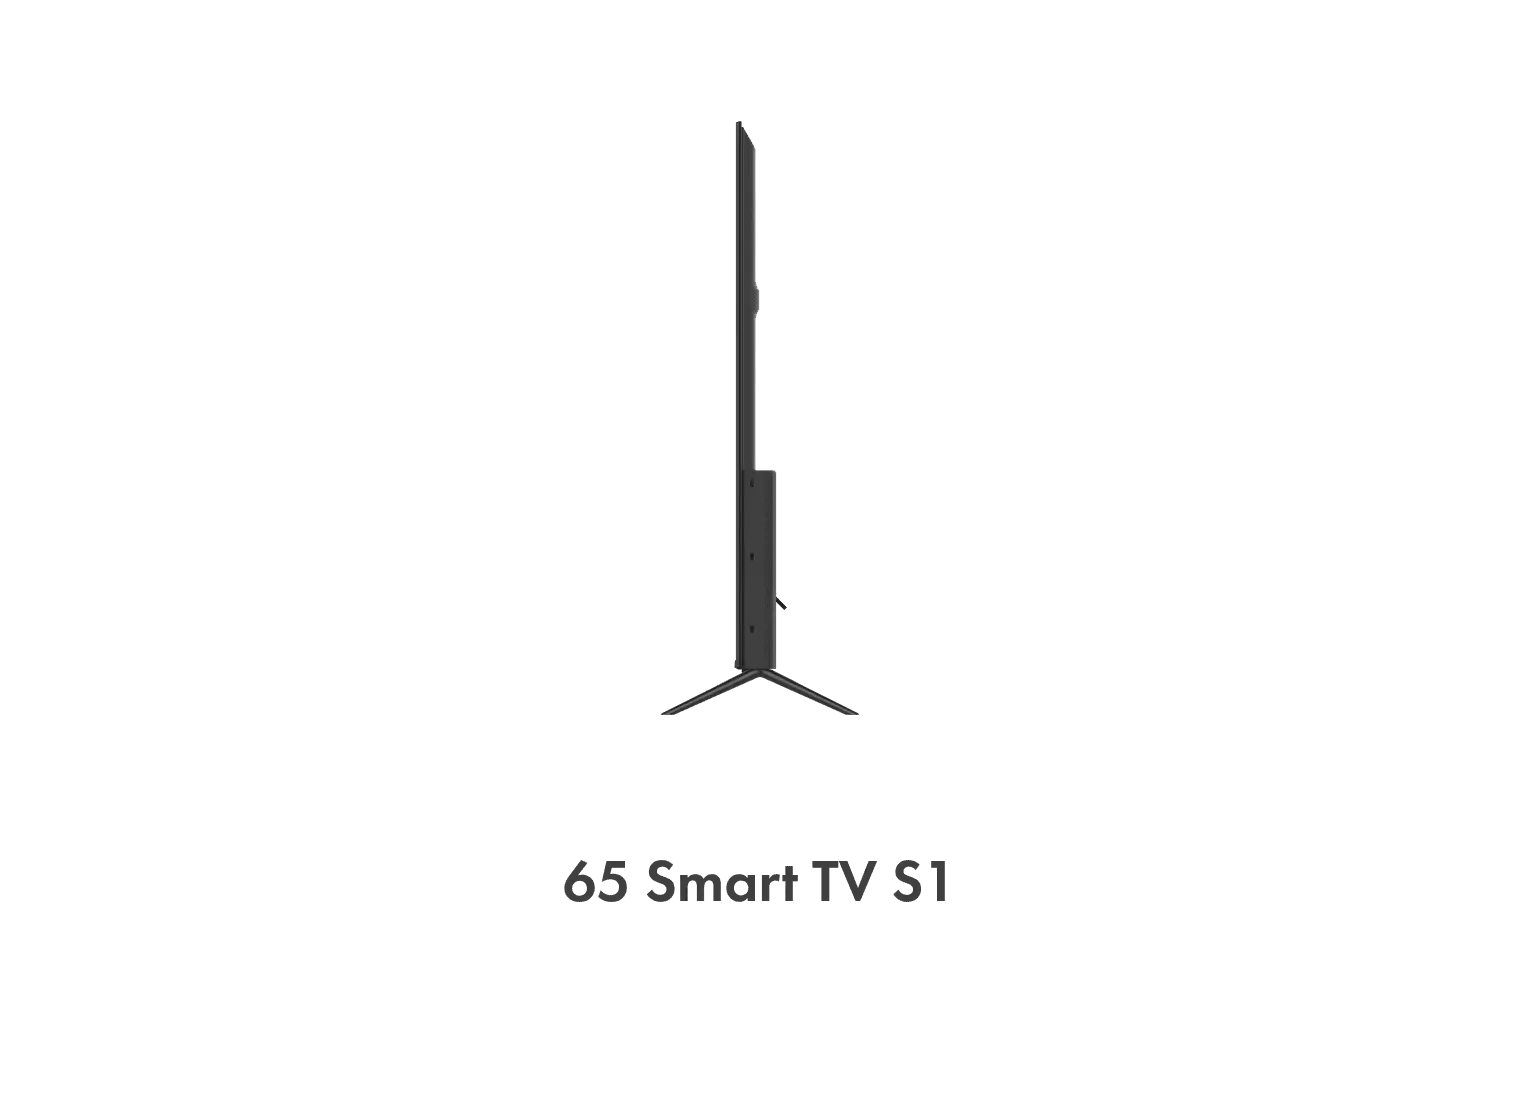 Телевизор Haier 65 Smart TV S1